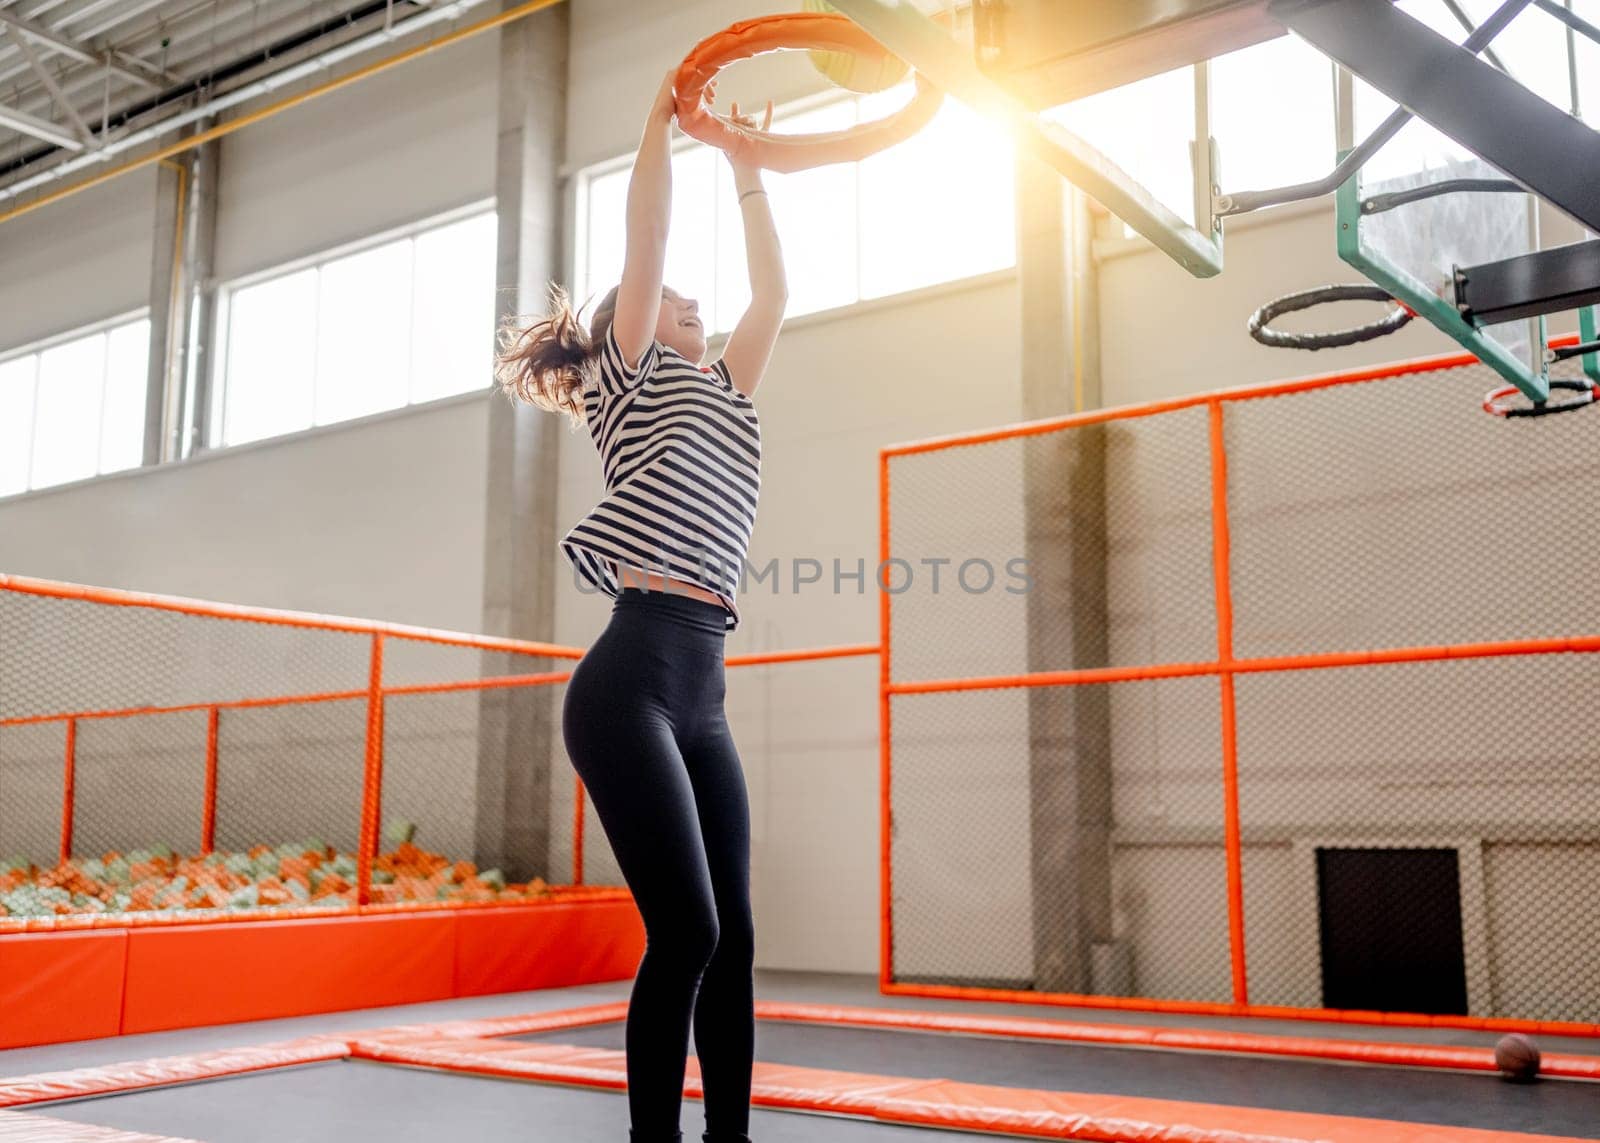 Pretty girl in trampoline park having fun by tan4ikk1